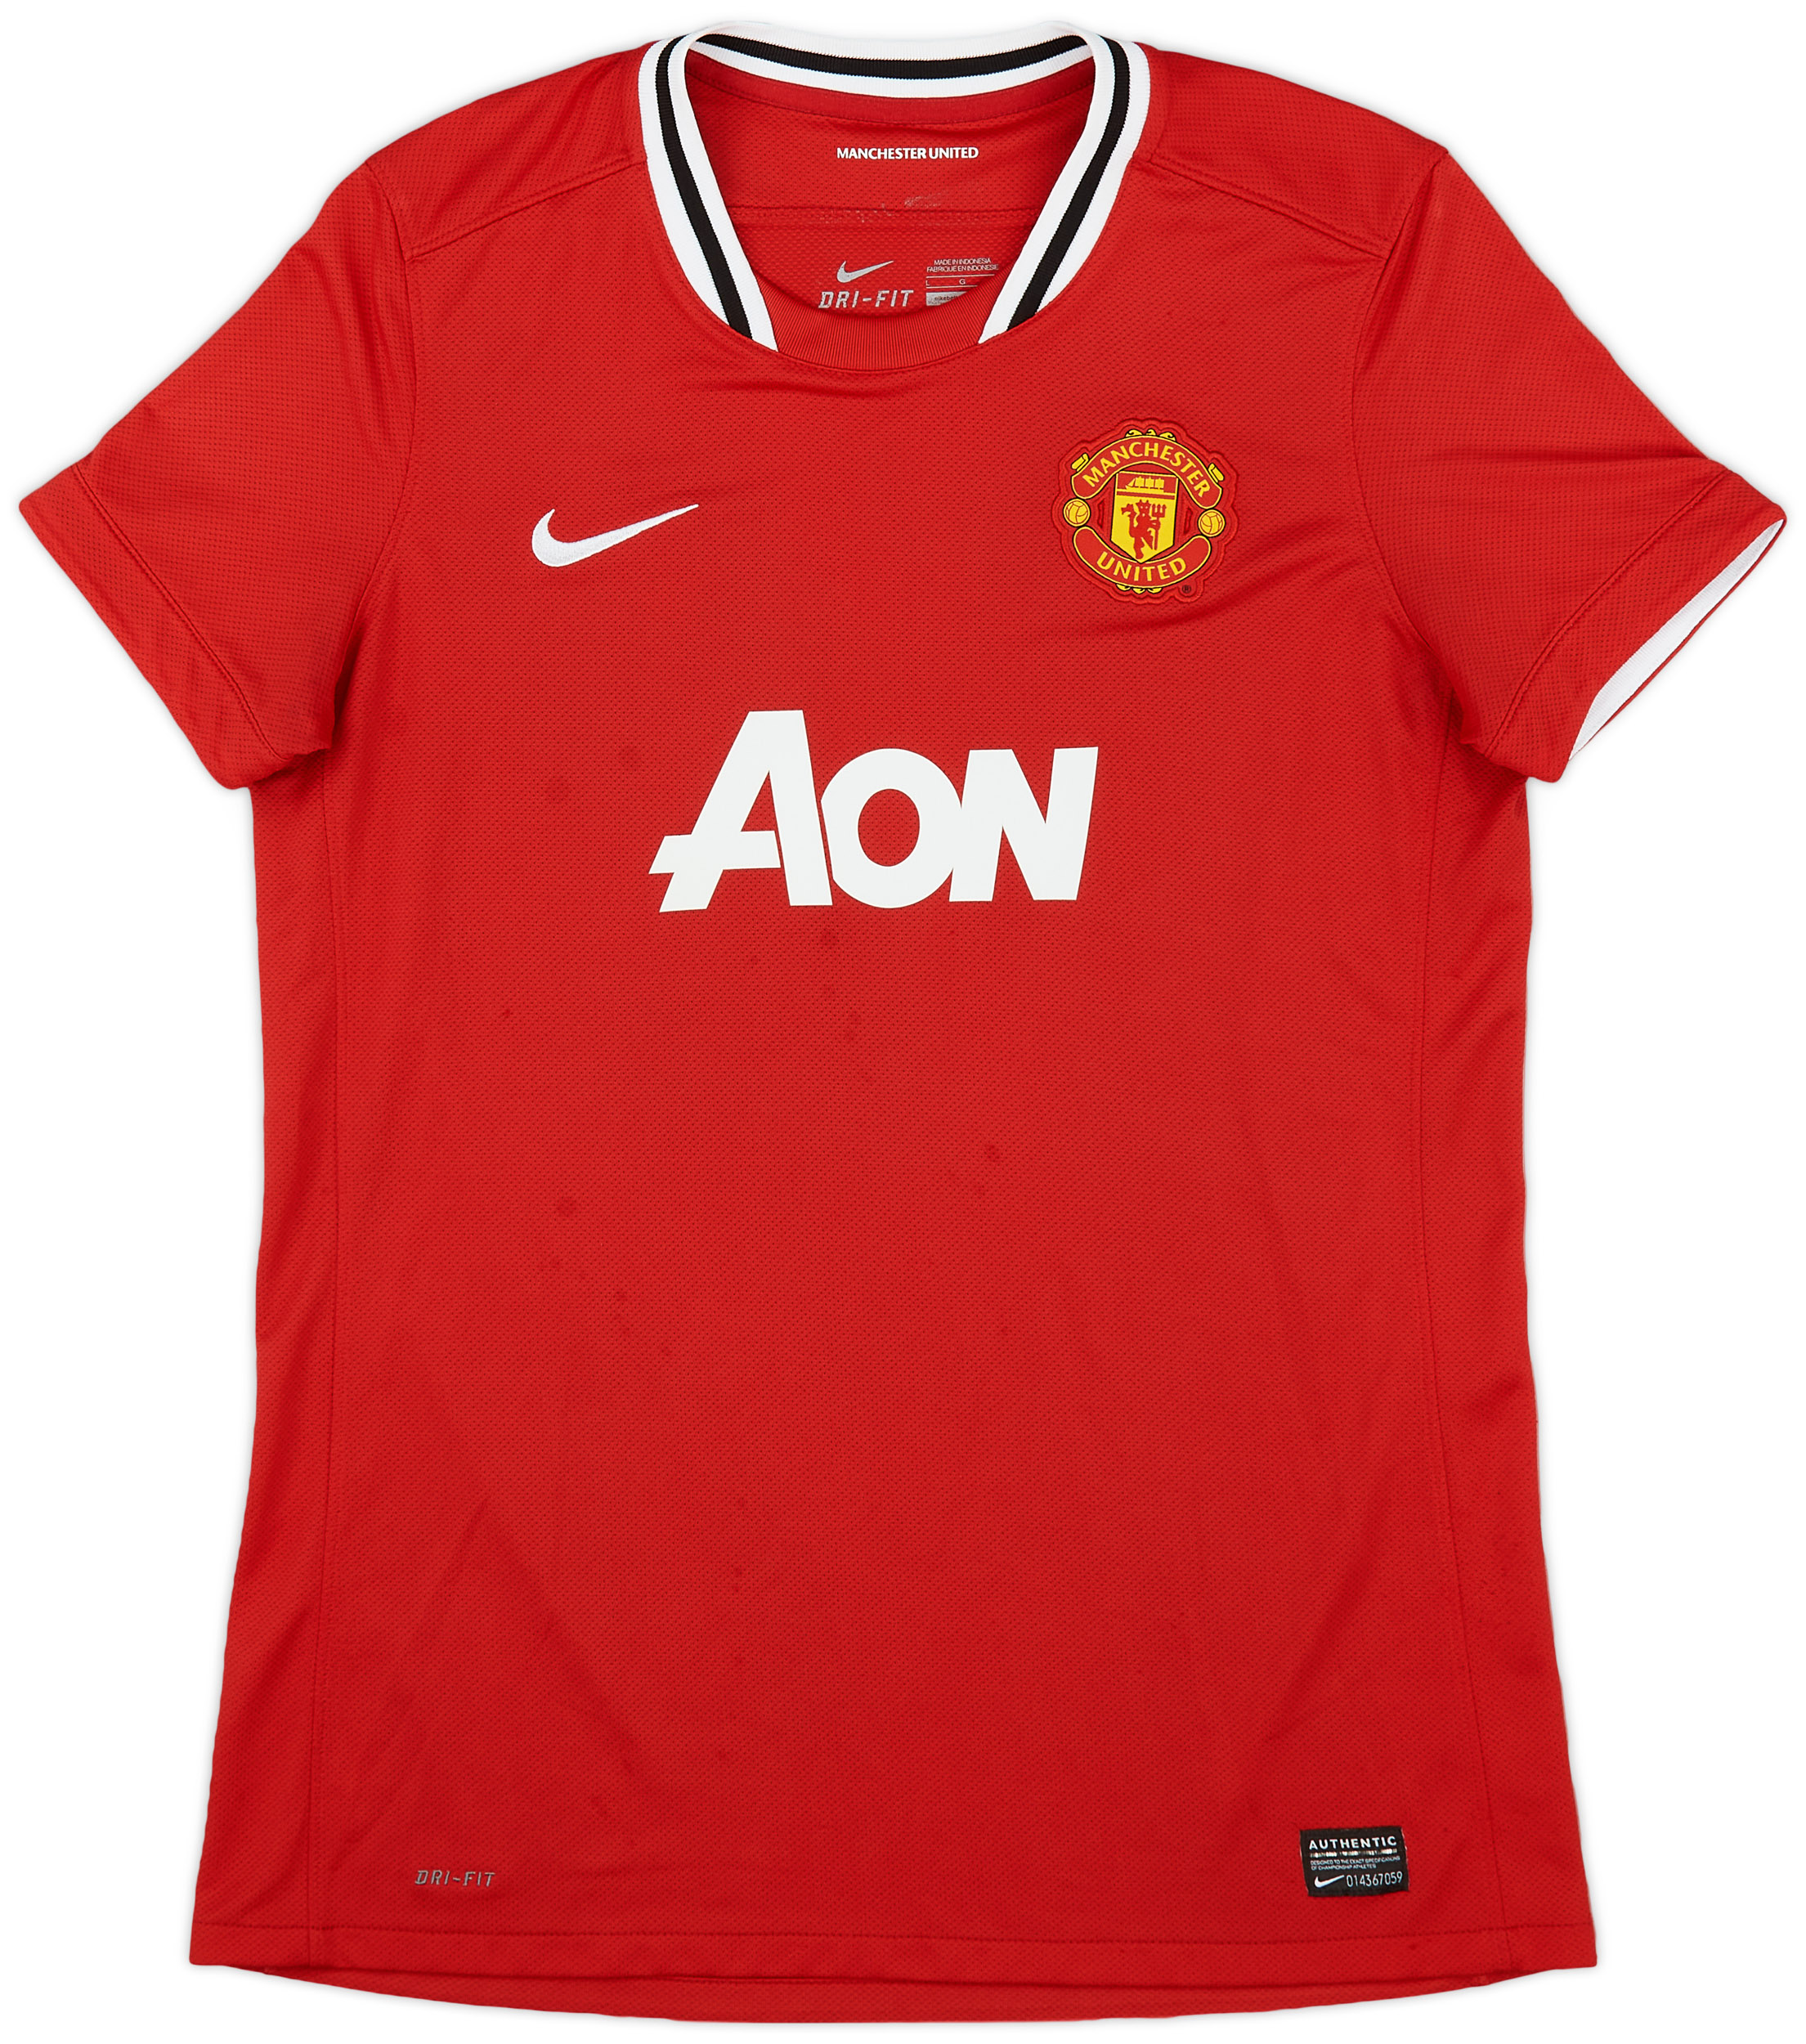 2011-12 Manchester United Home Shirt - 7/10 - (Women's )